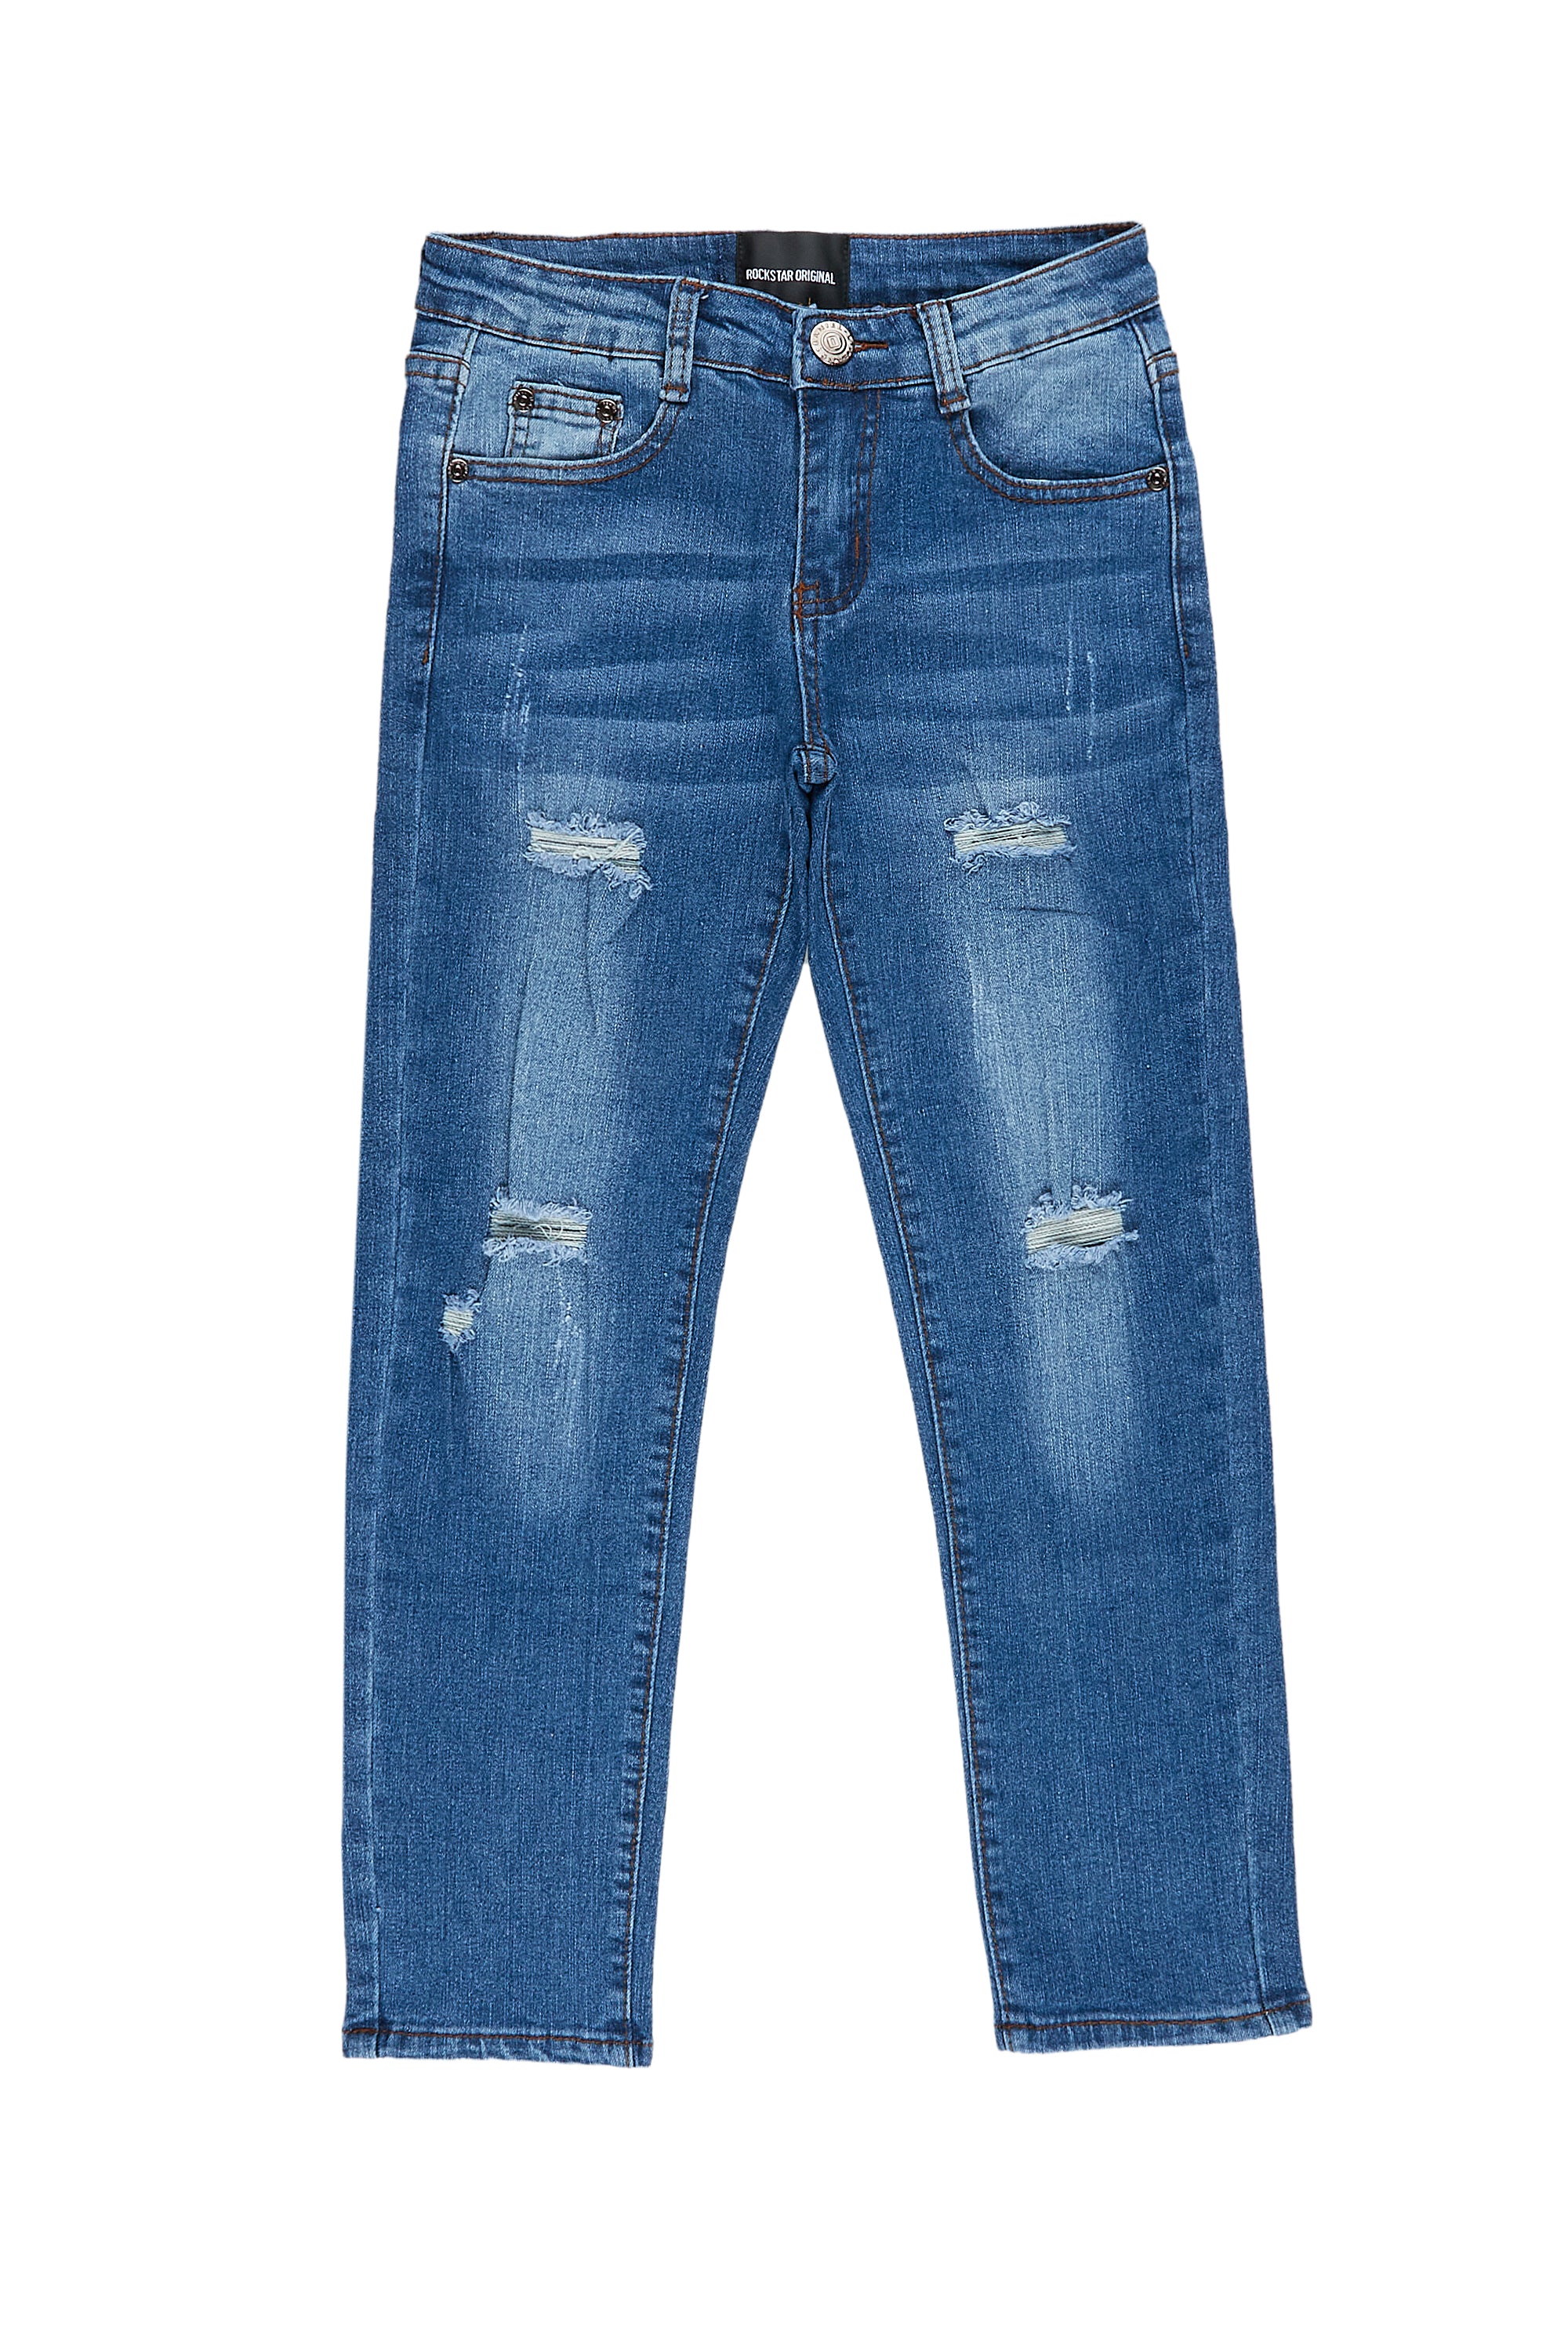 Boys Colter Blue 5 Pocket Jean